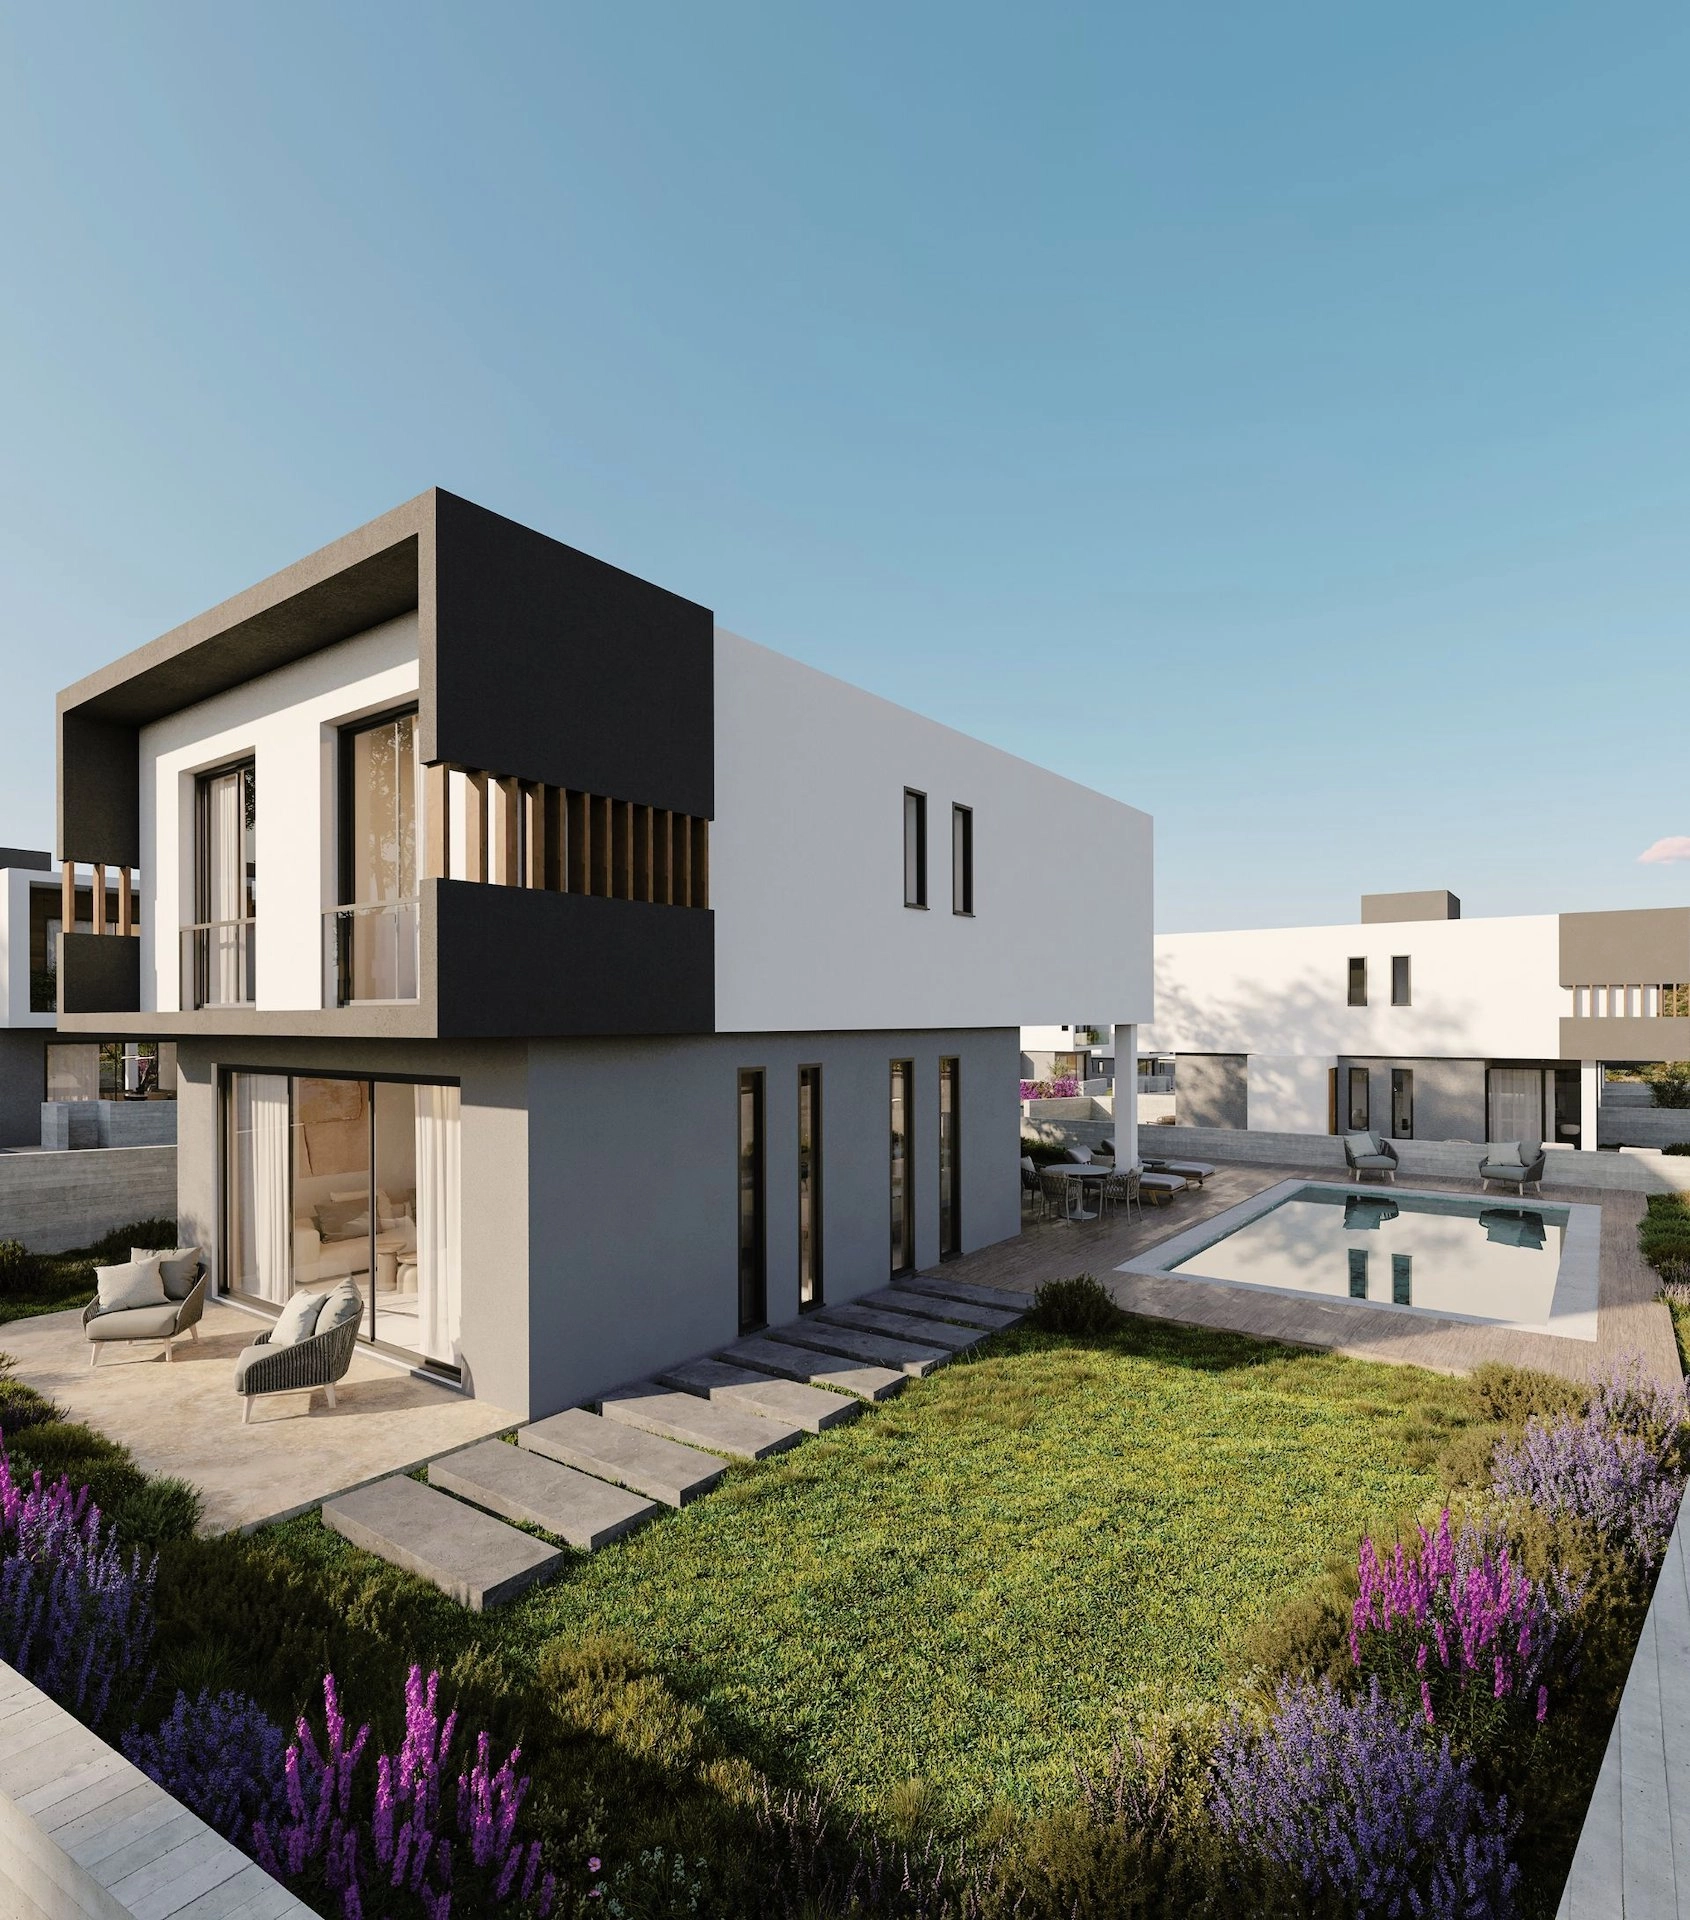 3 Bedroom Villa for Sale in Empa, Paphos District